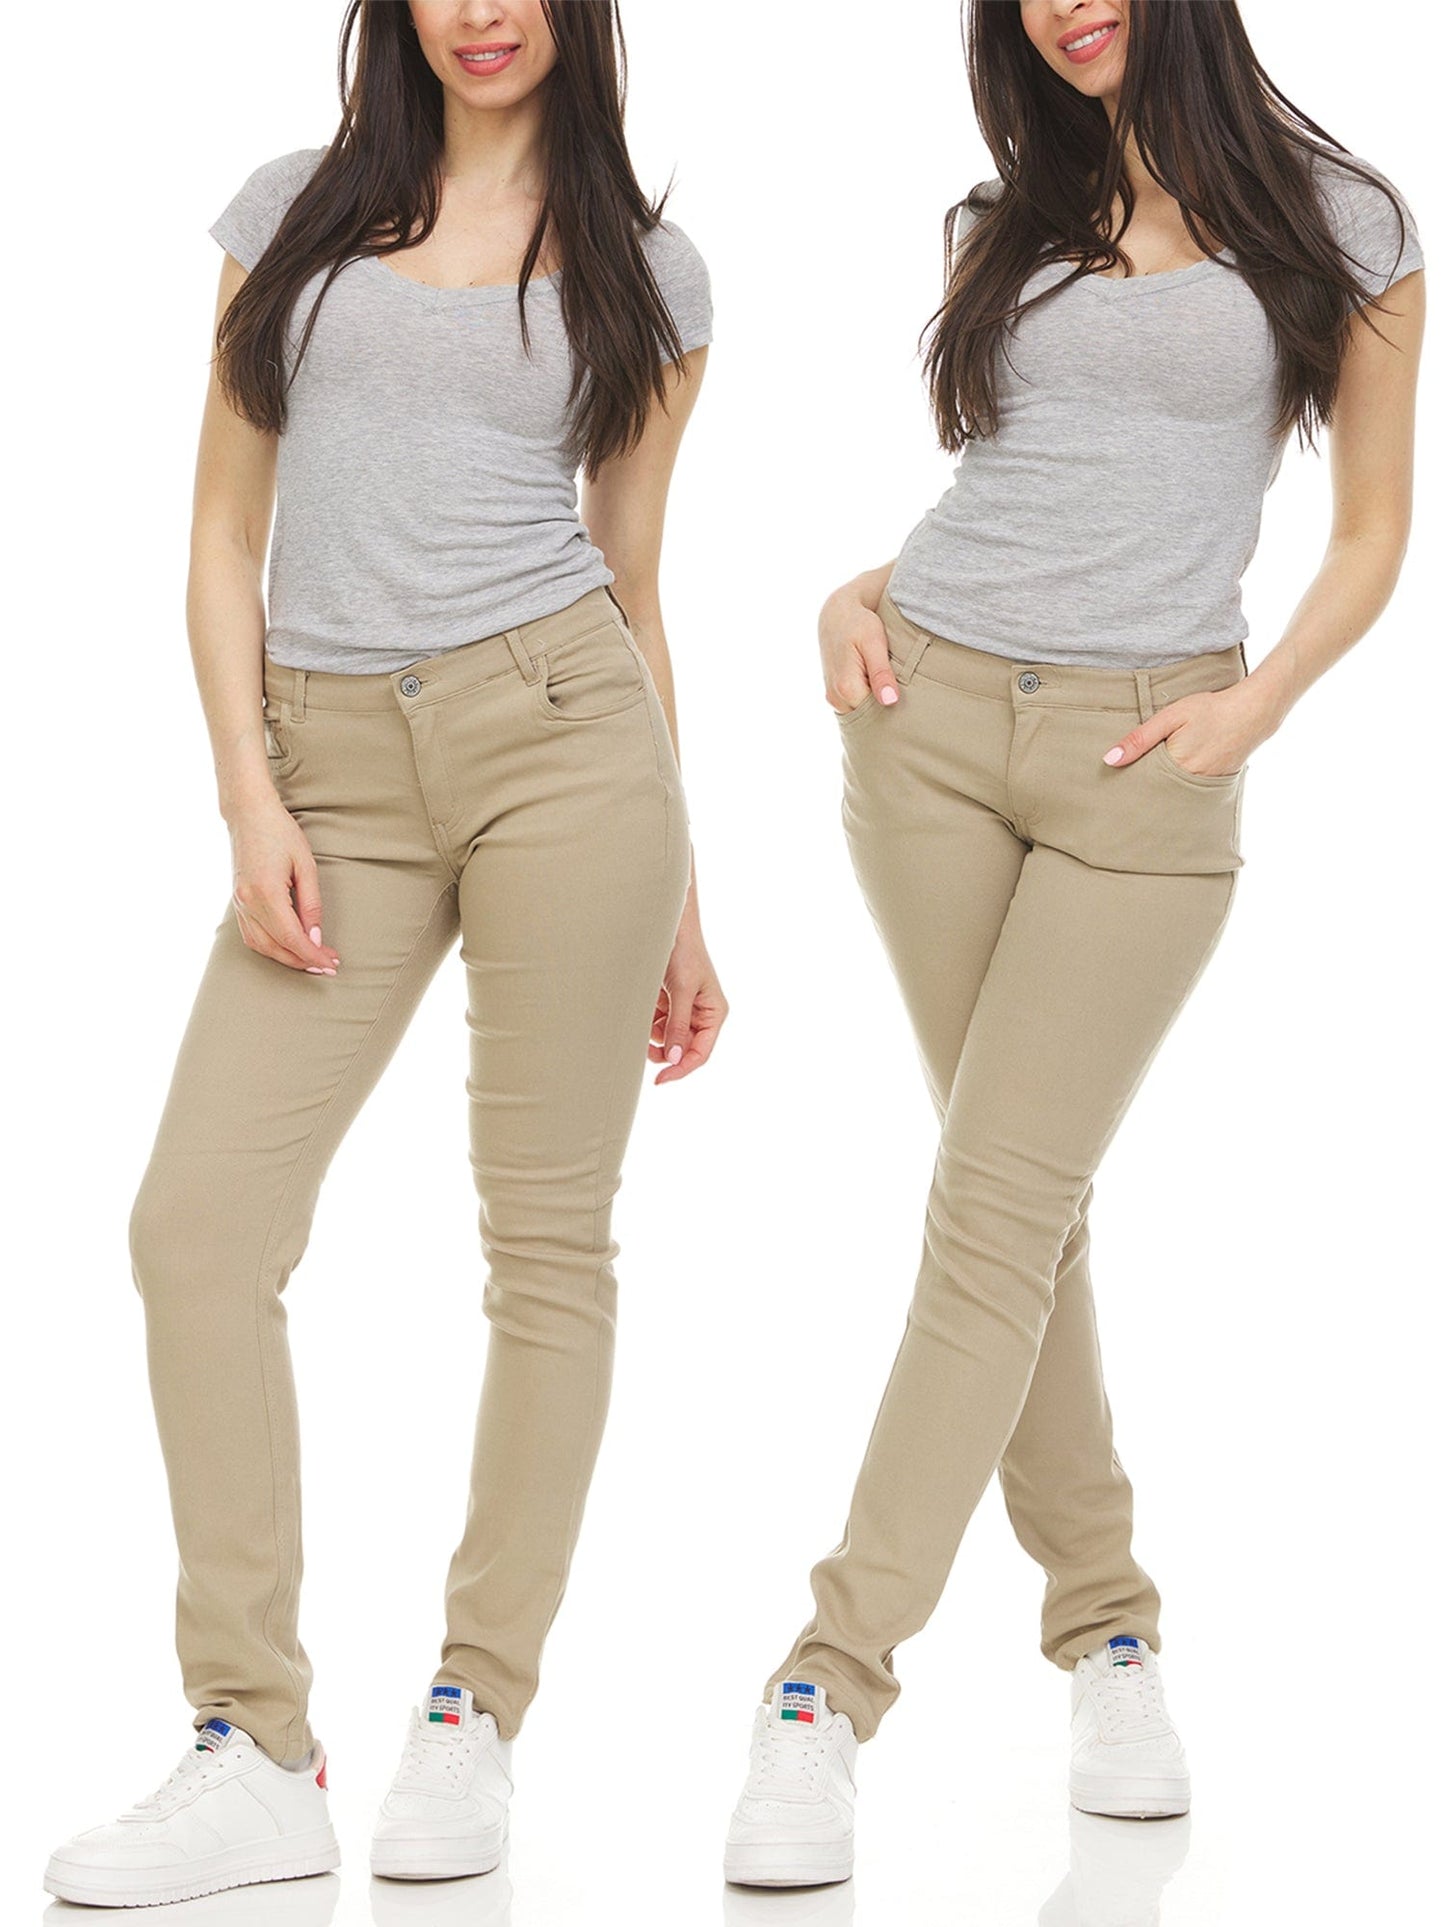 Women's Super Stretchy Skinny 5-Pocket Uniform Soft Chino Pants - GalaxybyHarvic